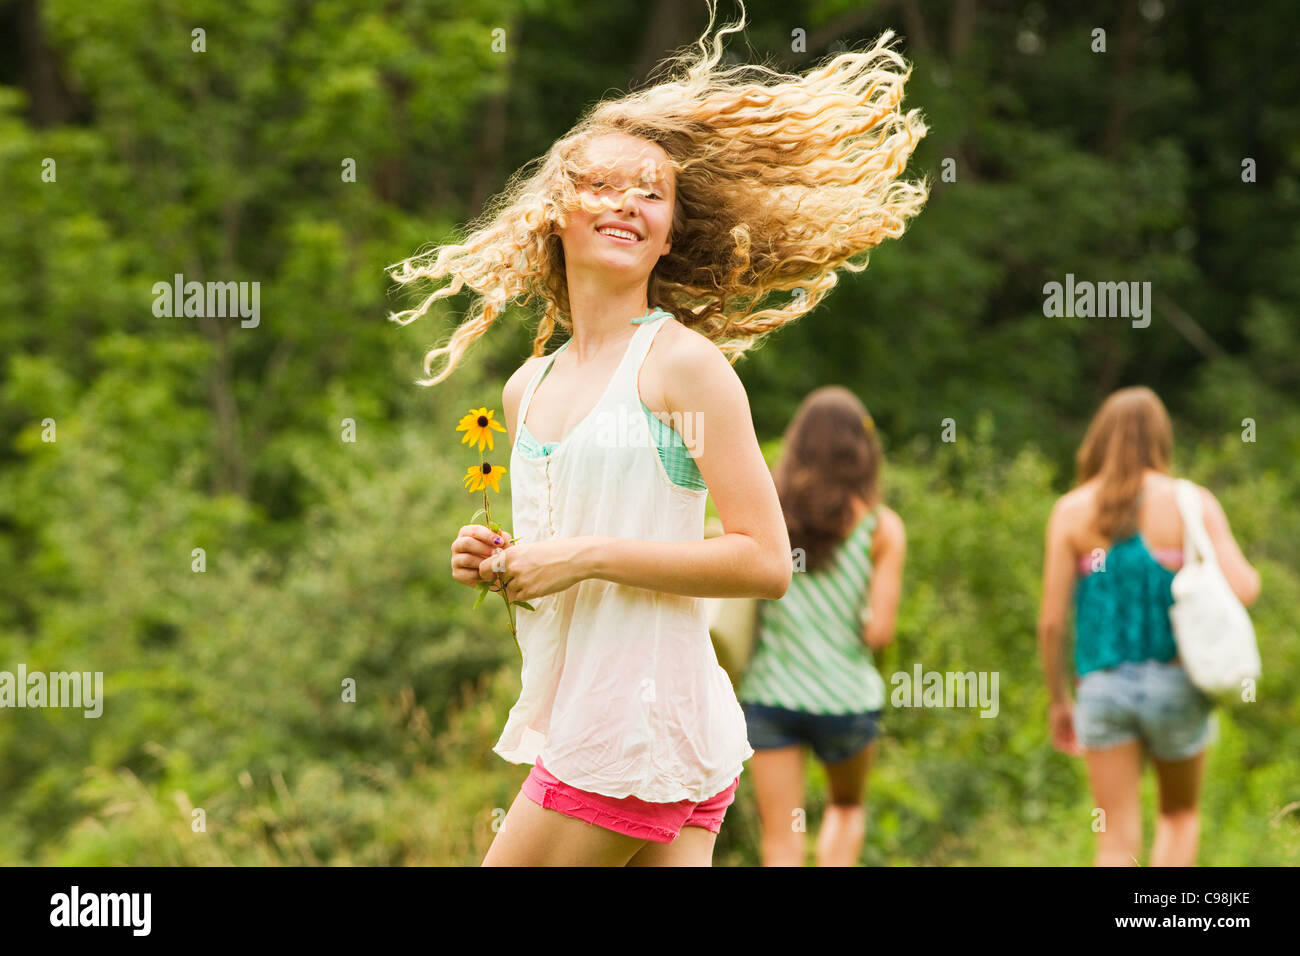 Teenage girl turning around and flicking hair Stock Photo